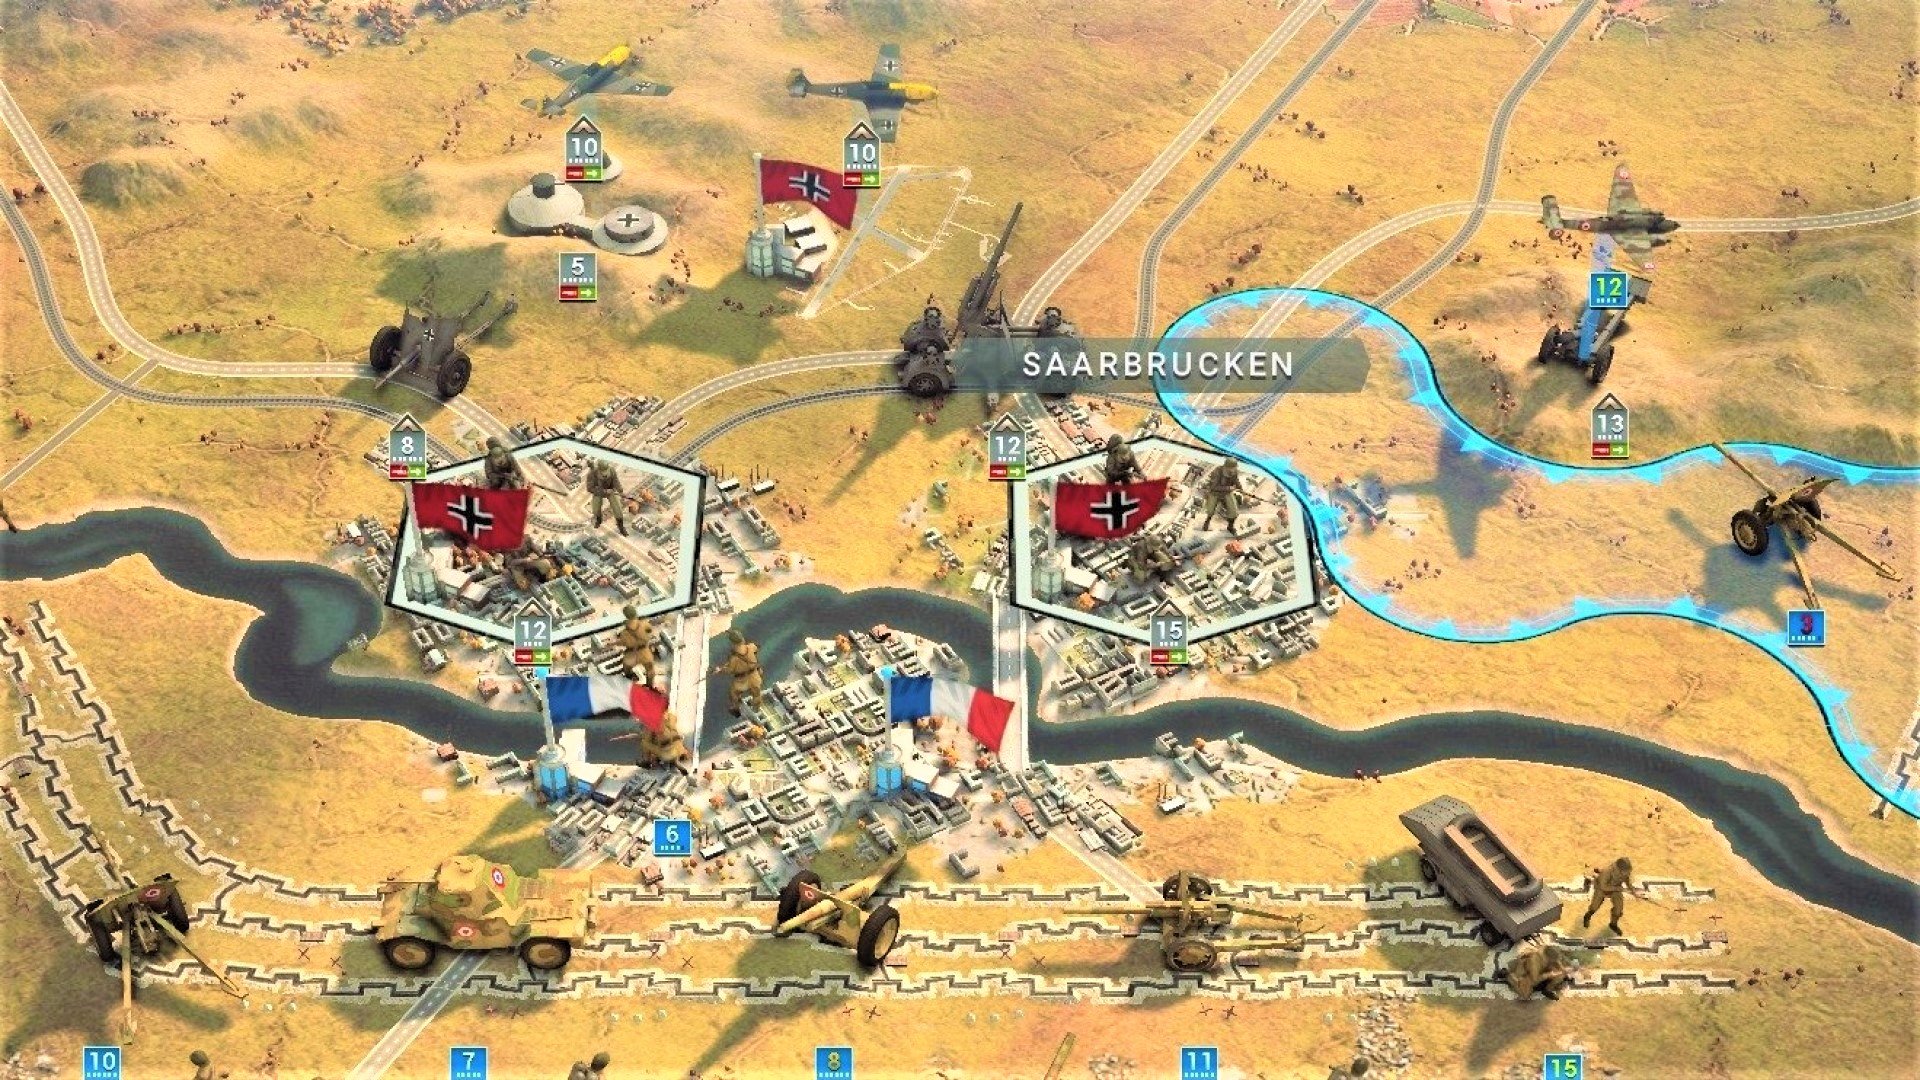 Best WW2 games - screenshot from Panzer Corps 2 showing units surrounding the town of Saarbrucken